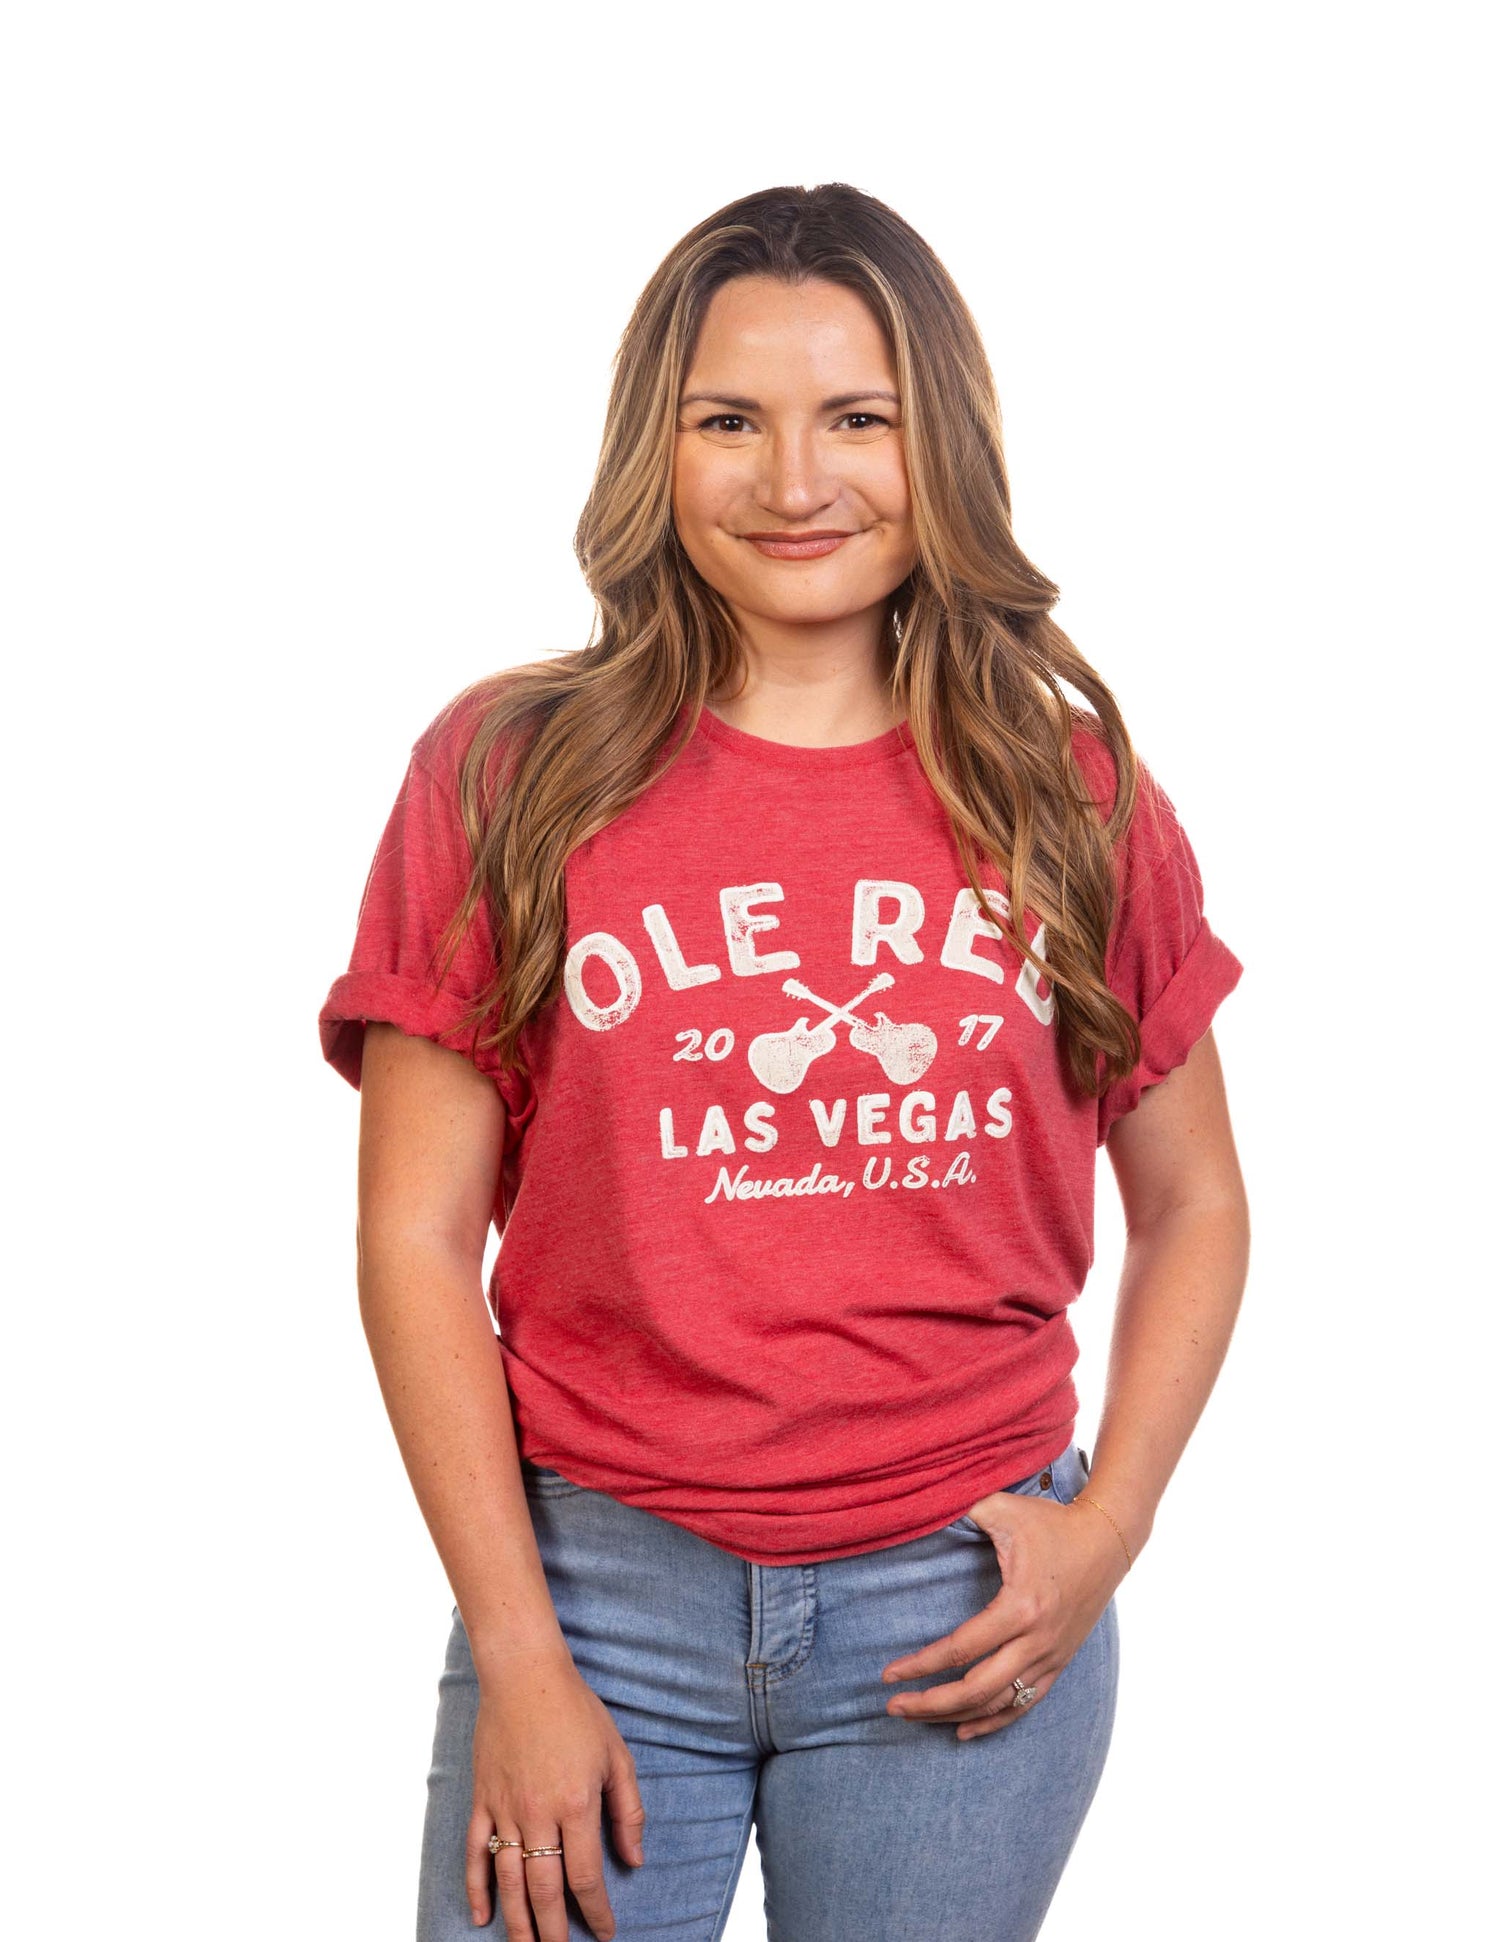 Ole Red Vegas Crossed Guitars T-Shirt